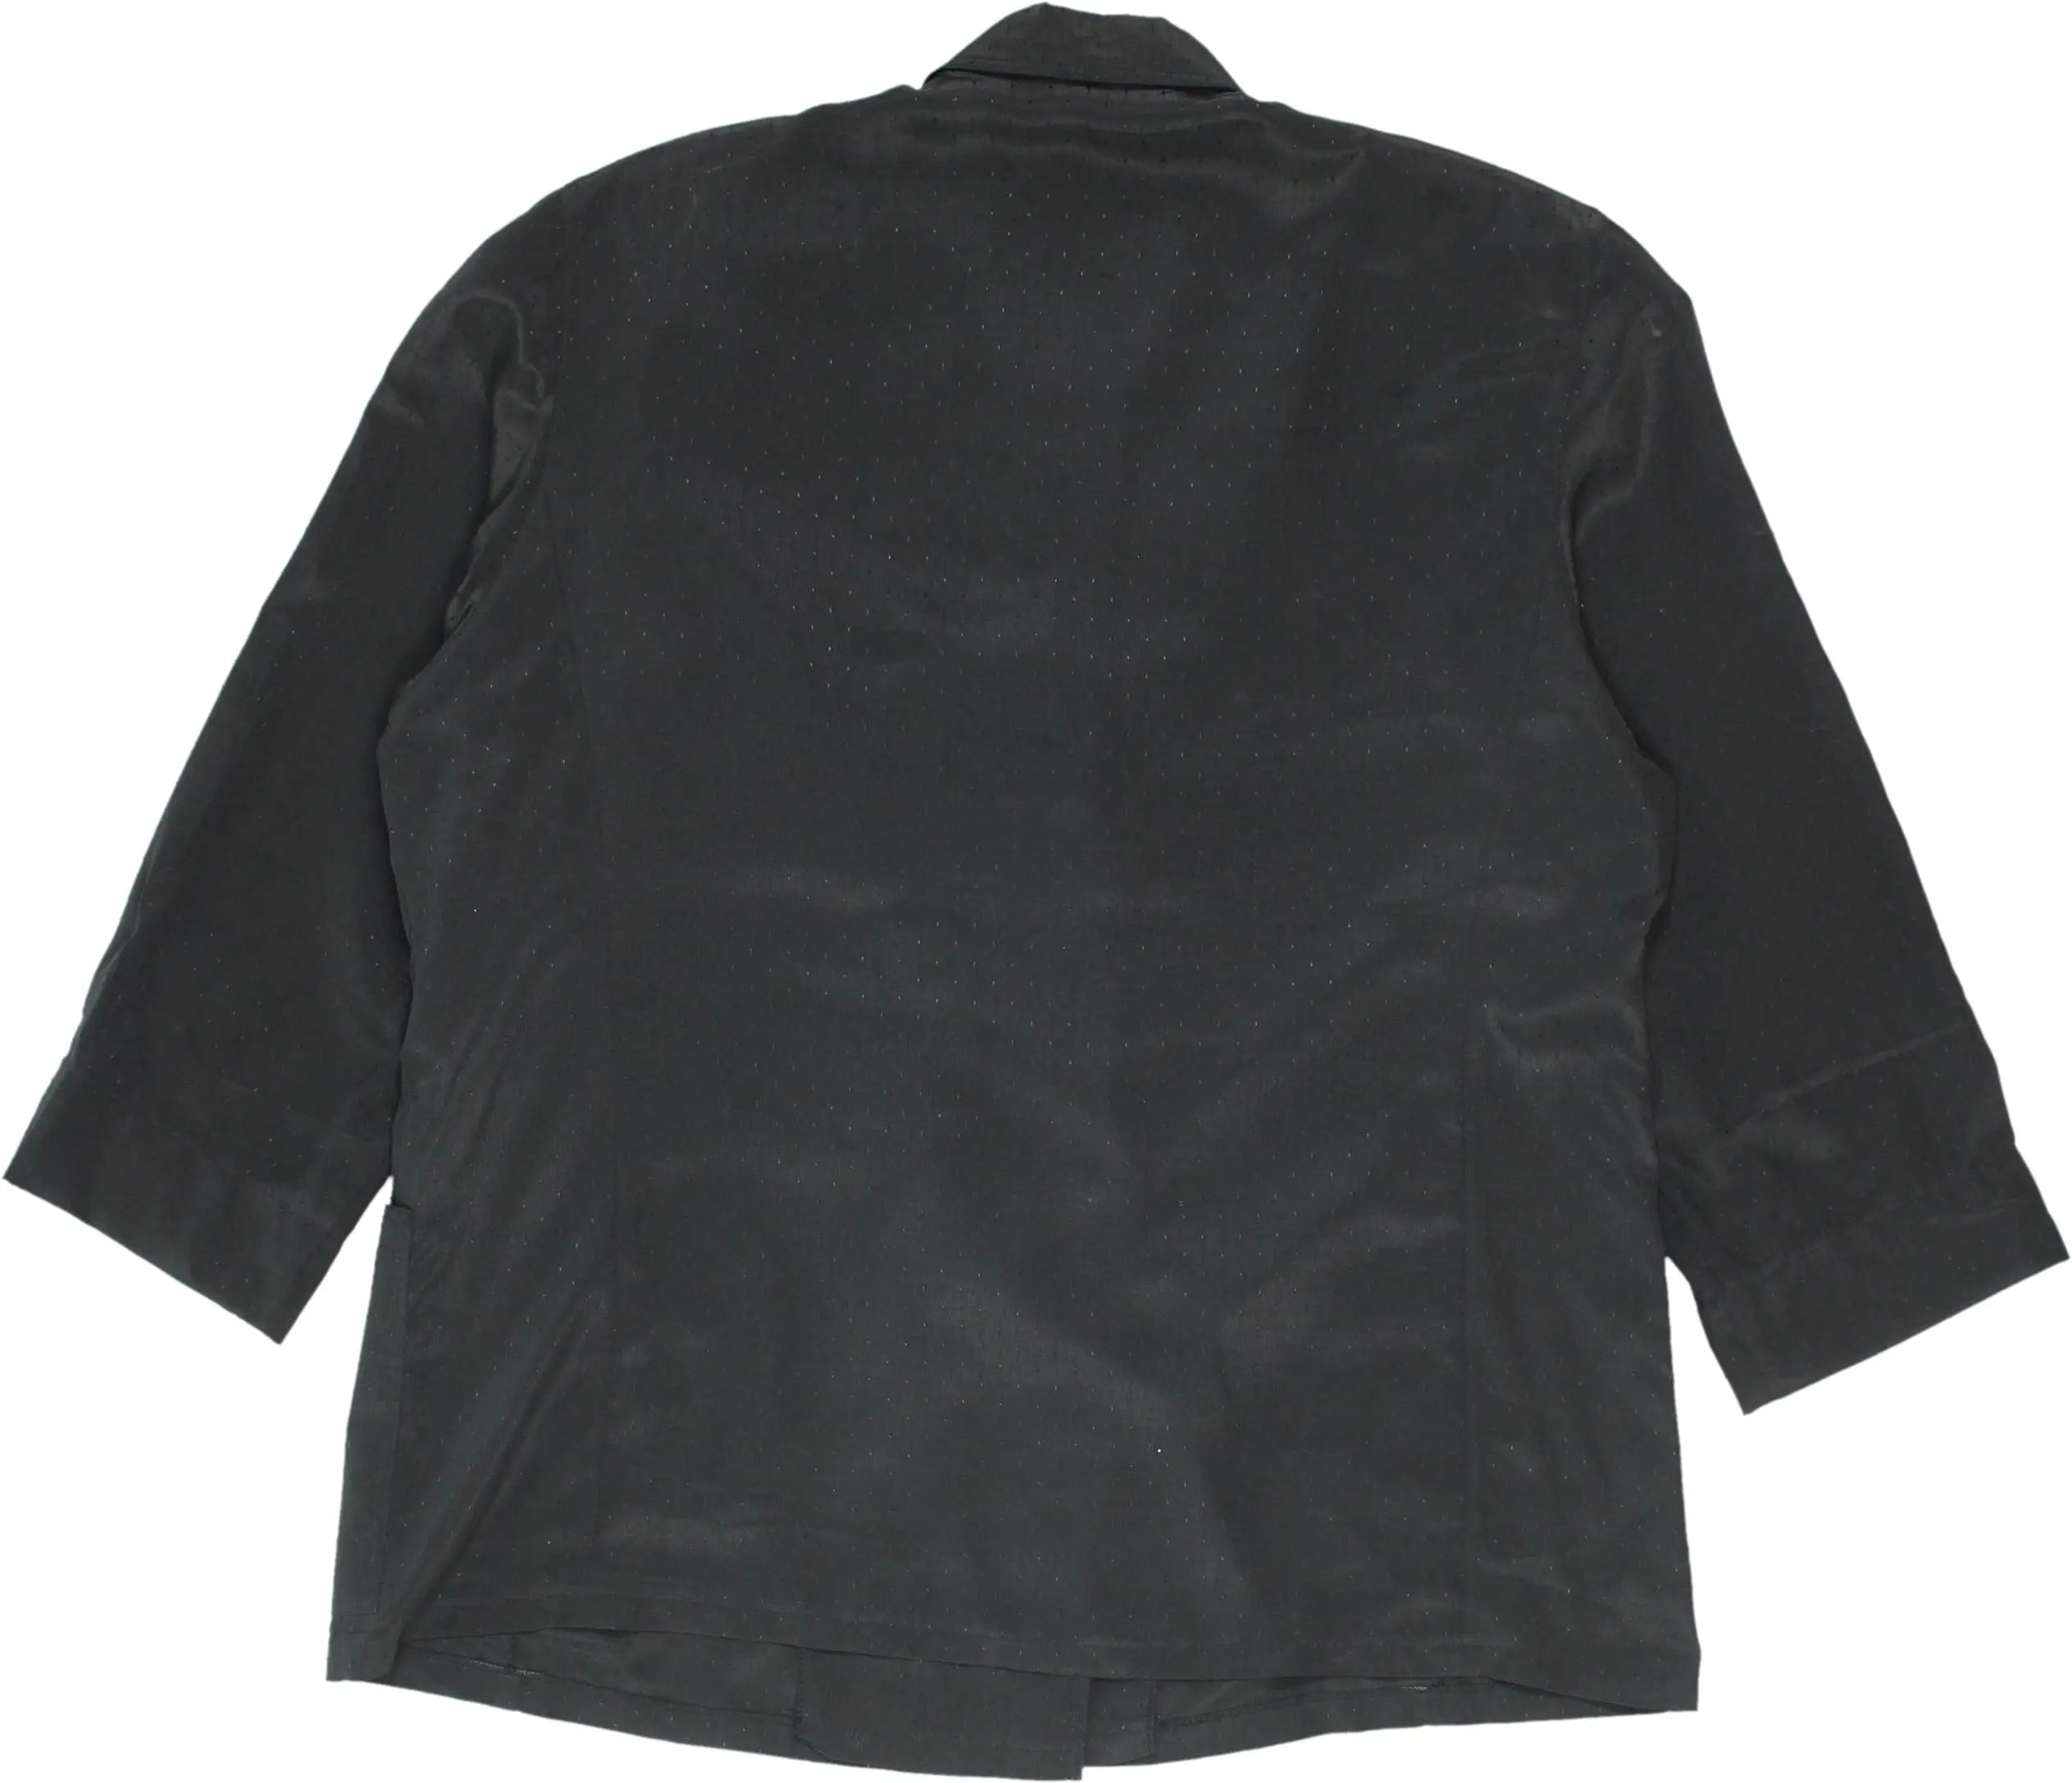 Unknown - Vintage Black Blazer- ThriftTale.com - Vintage and second handclothing